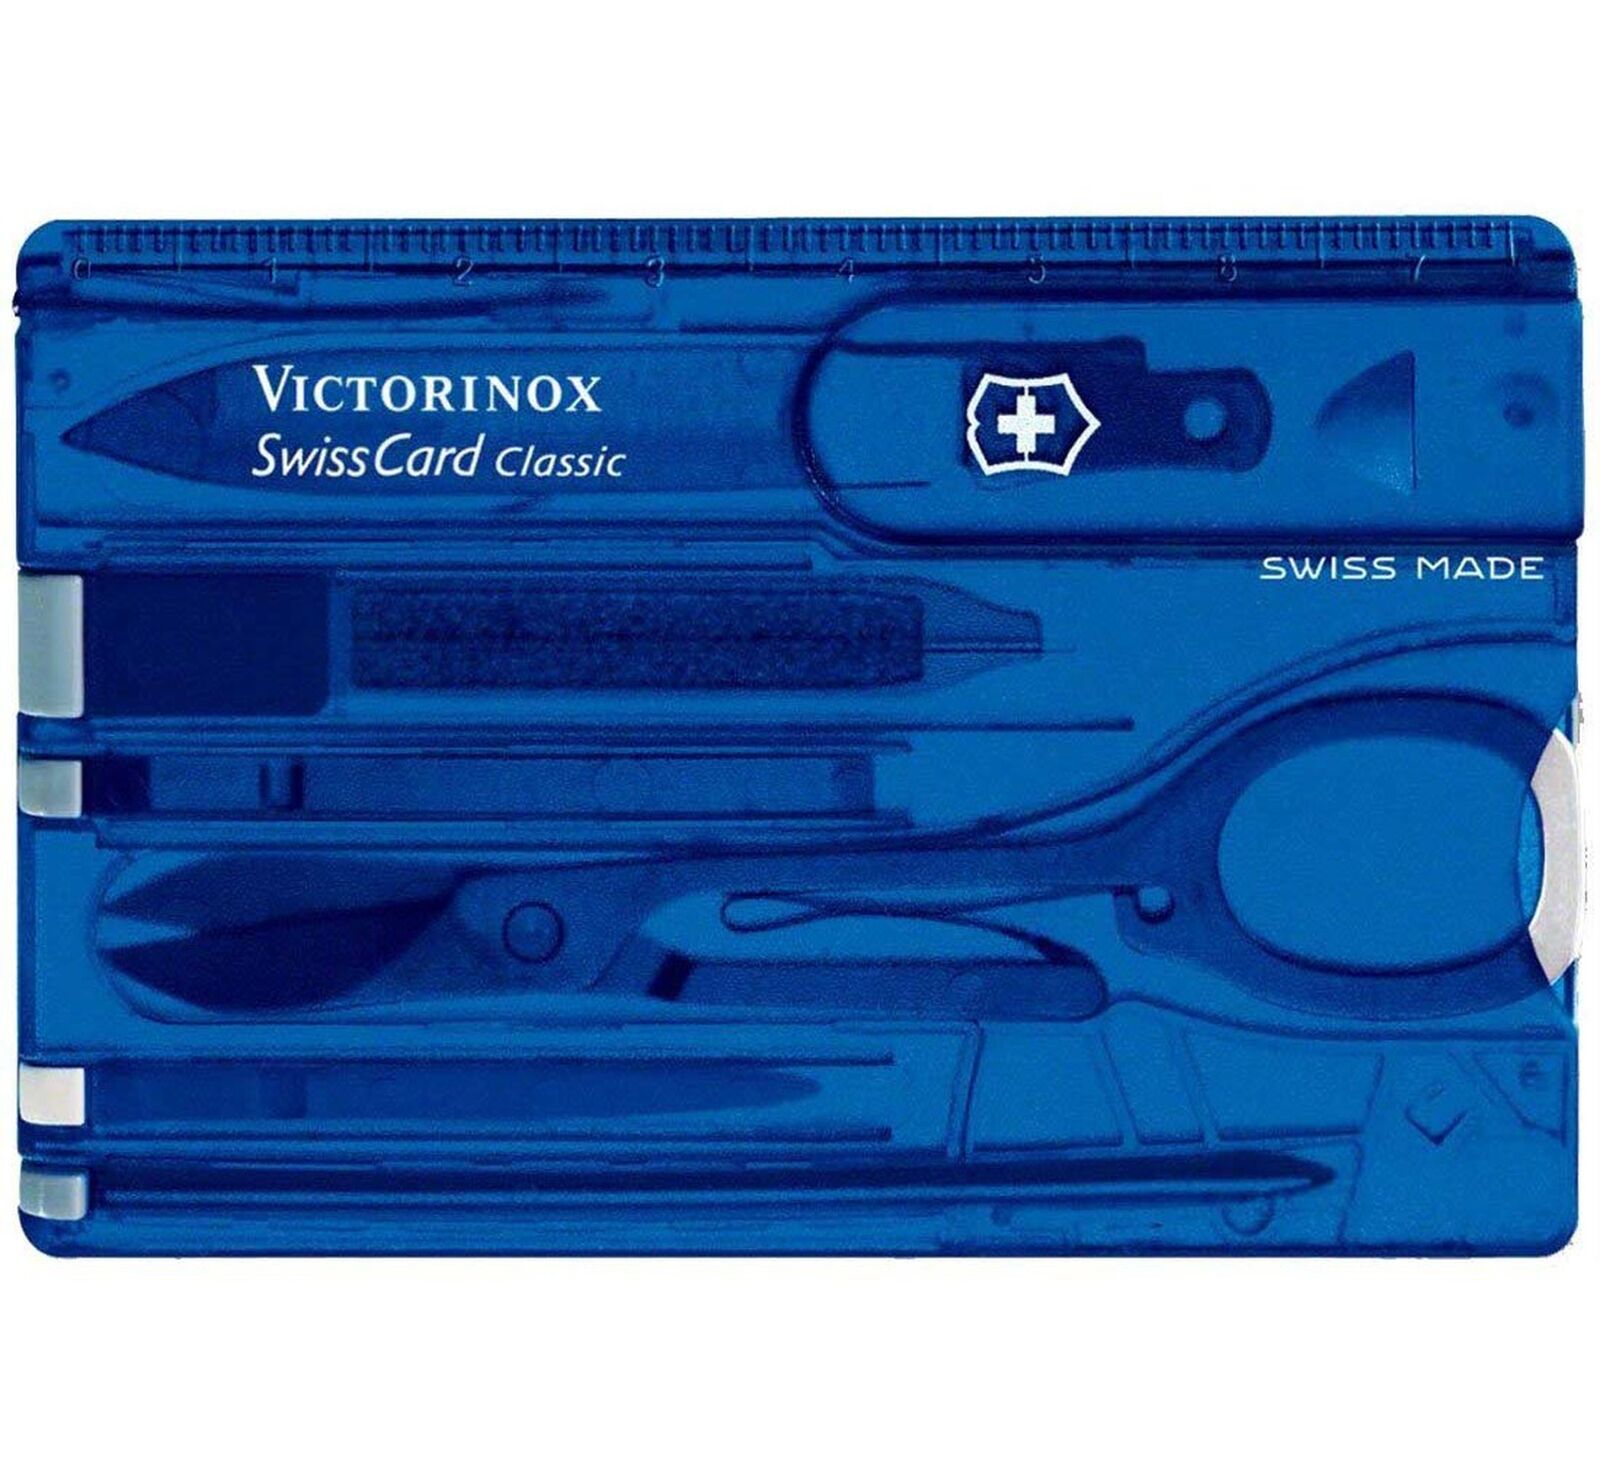 Victorinox Swiss Card Translucent Blue Blister Pack 0.7122.T2B1